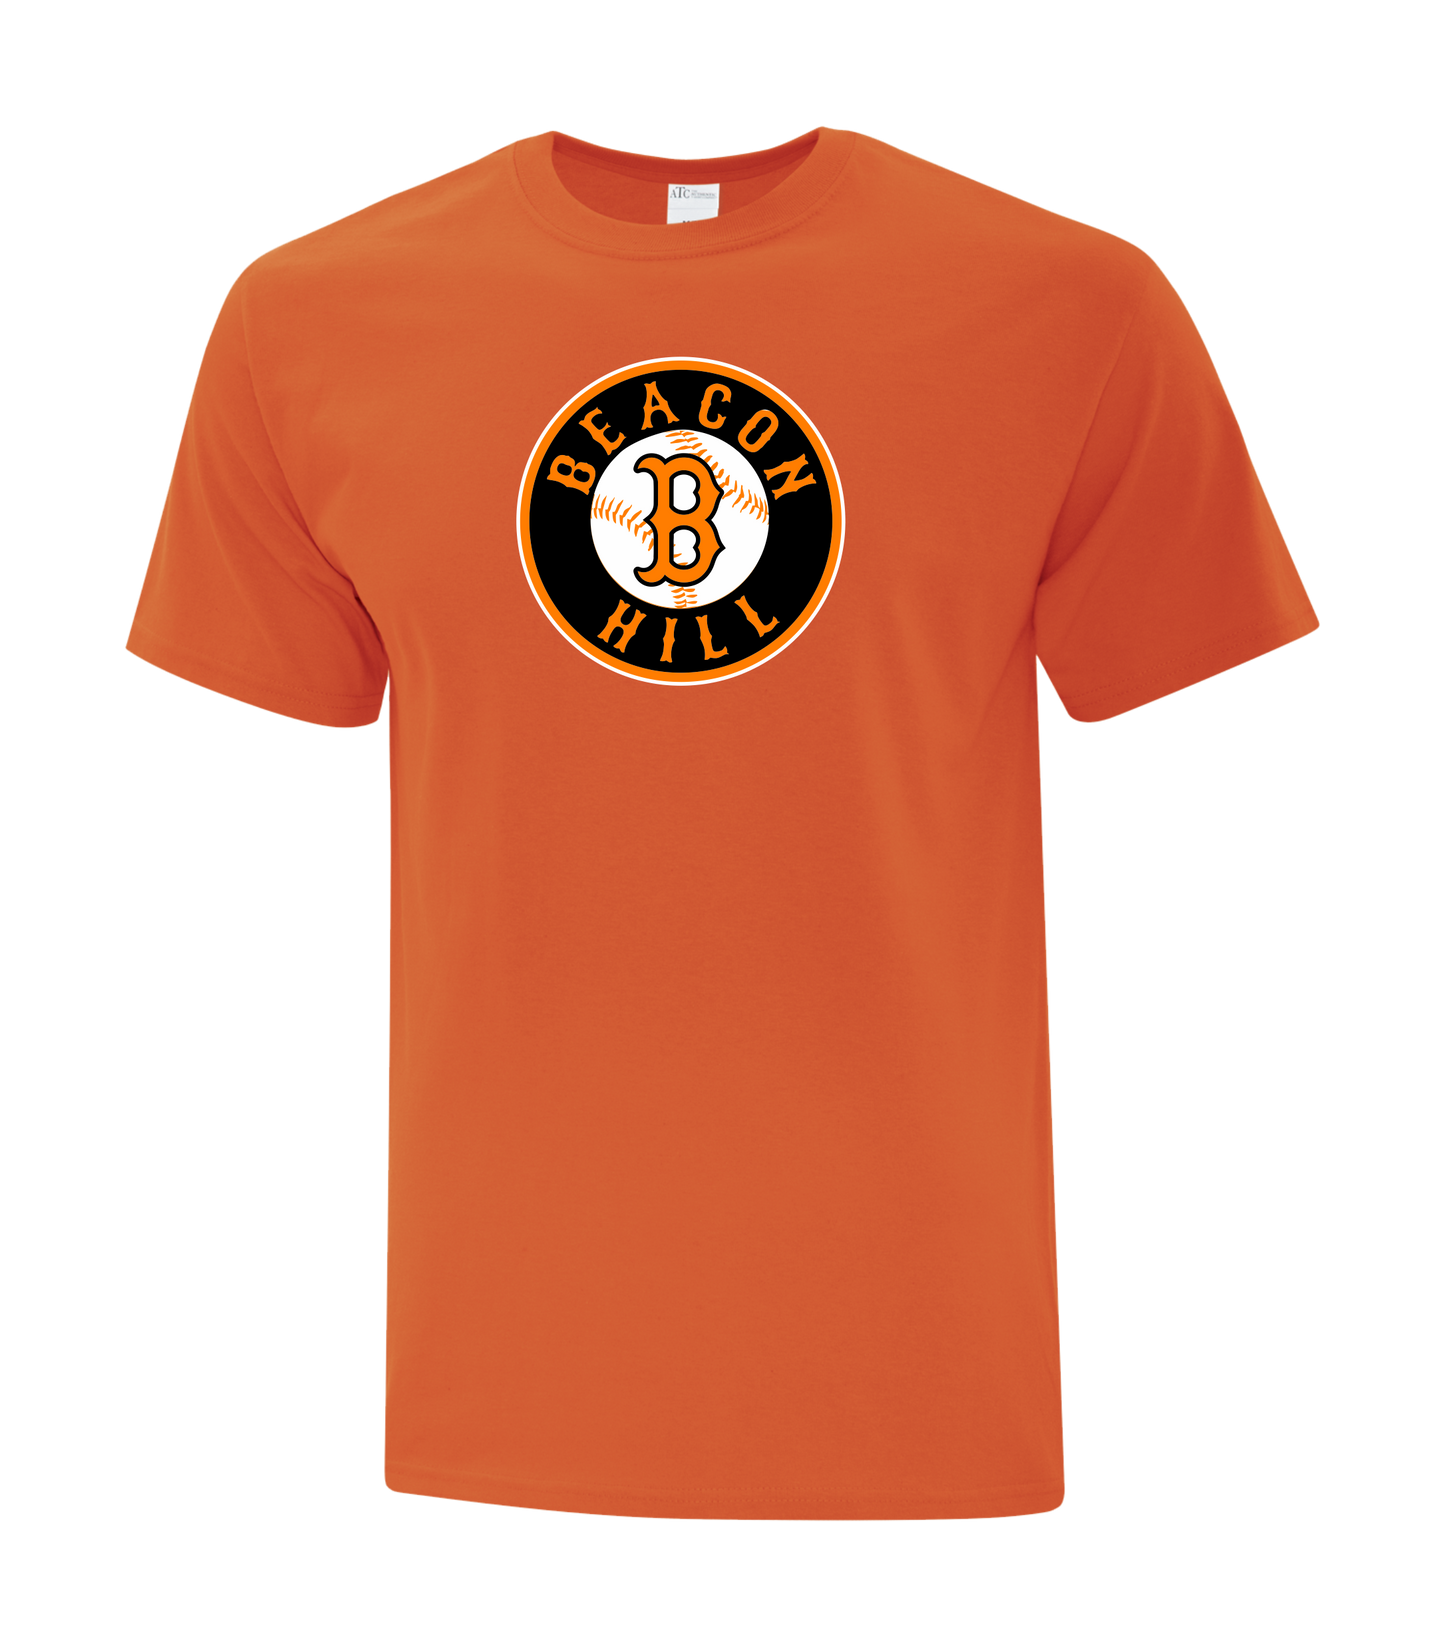 Beacon Hill Unisex and Youth Cotton Orange Tshirt